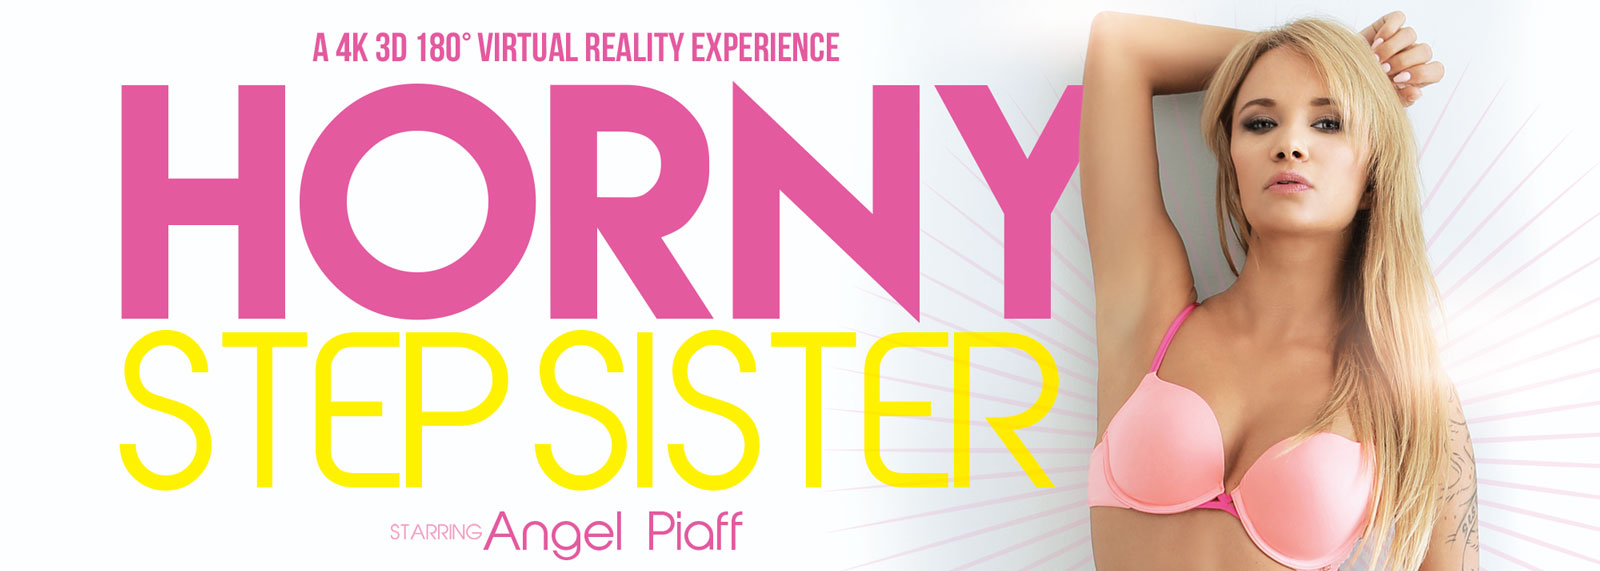 Horny step sister virtual reality